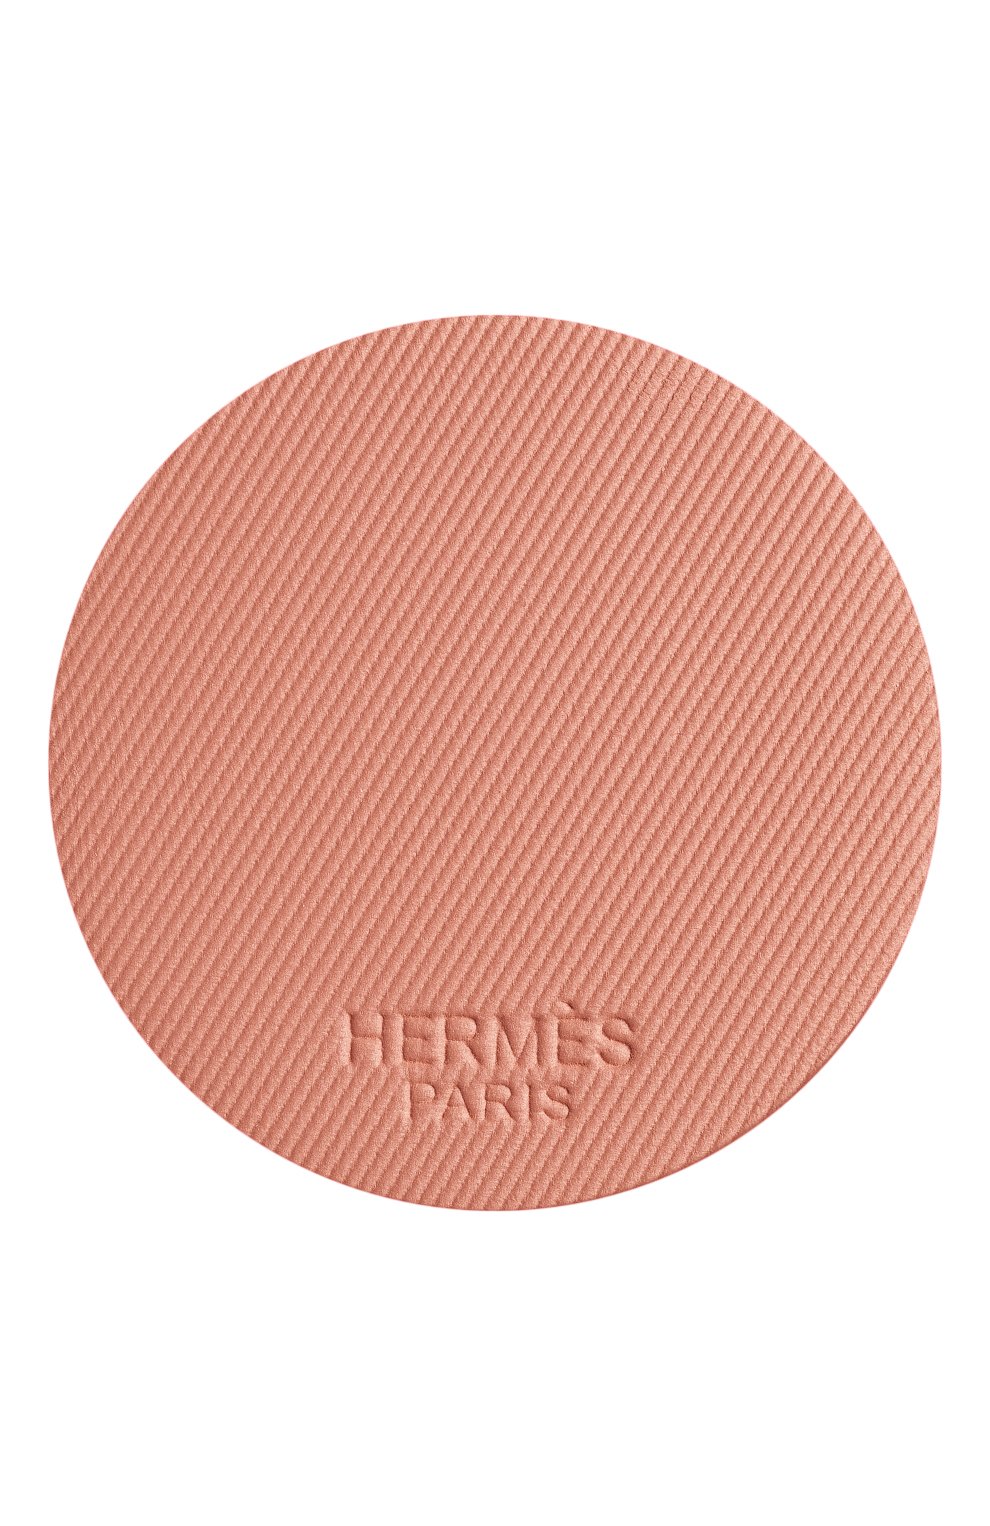 Румяна rose hermès silky blush, rose tan (6g) HERMÈS бесцветного цвета, арт. 60165PV049H | Фото 8